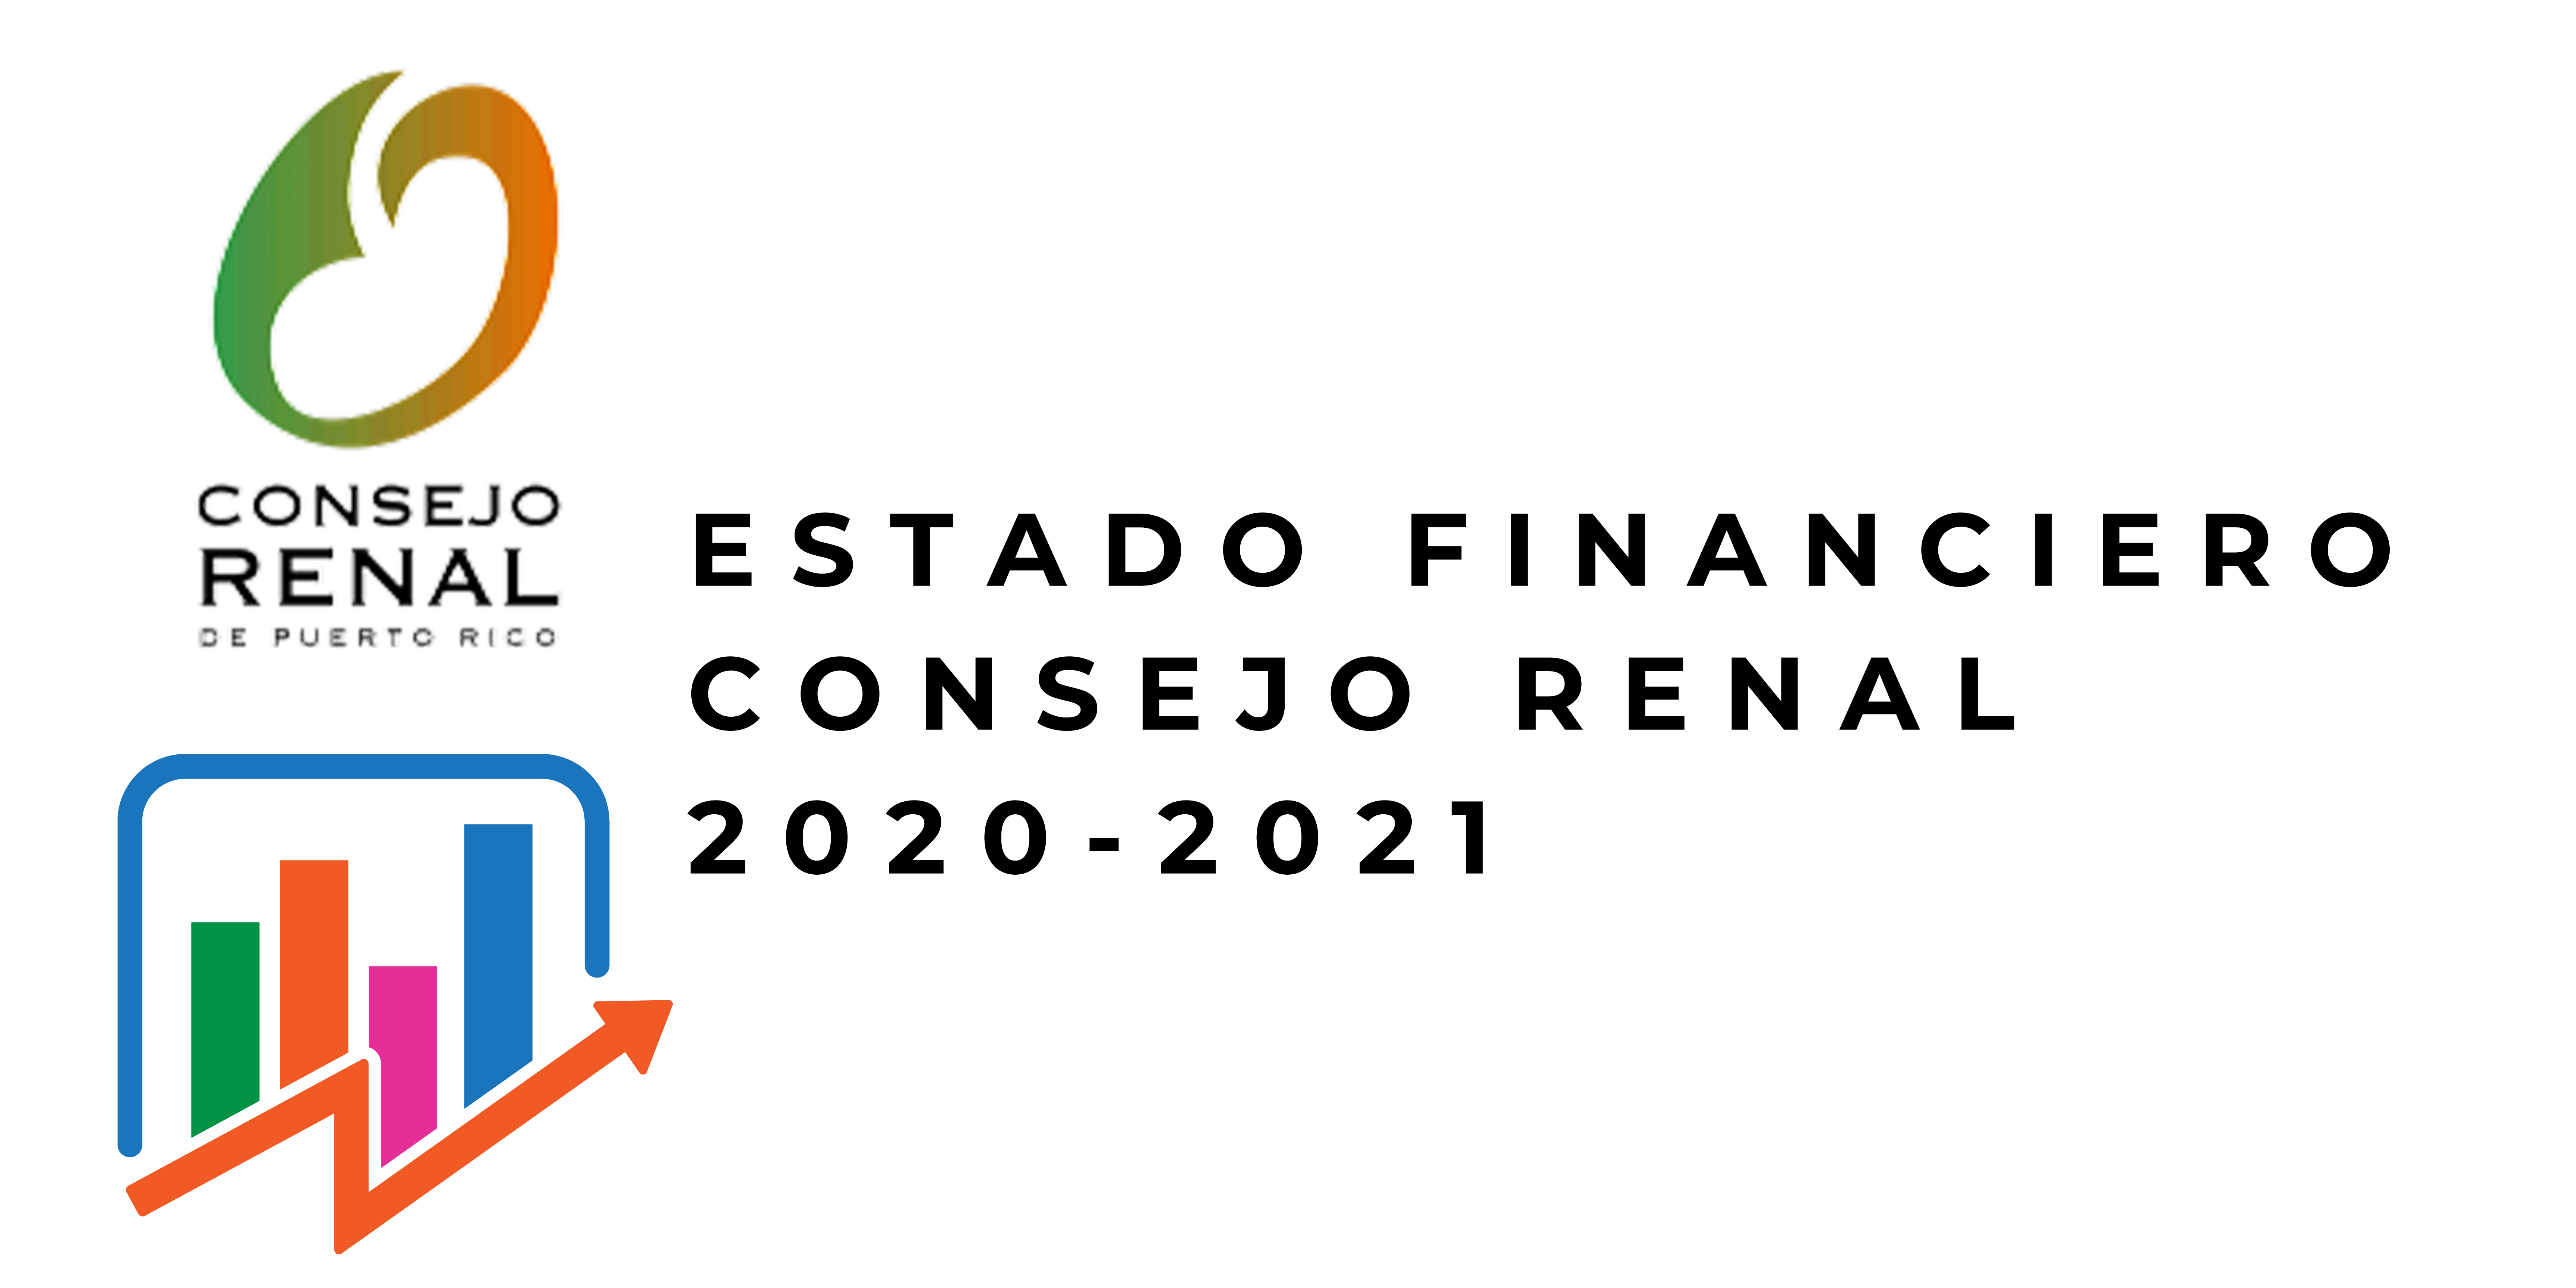 Estado Financiero Consejo Renal logo2020 2021